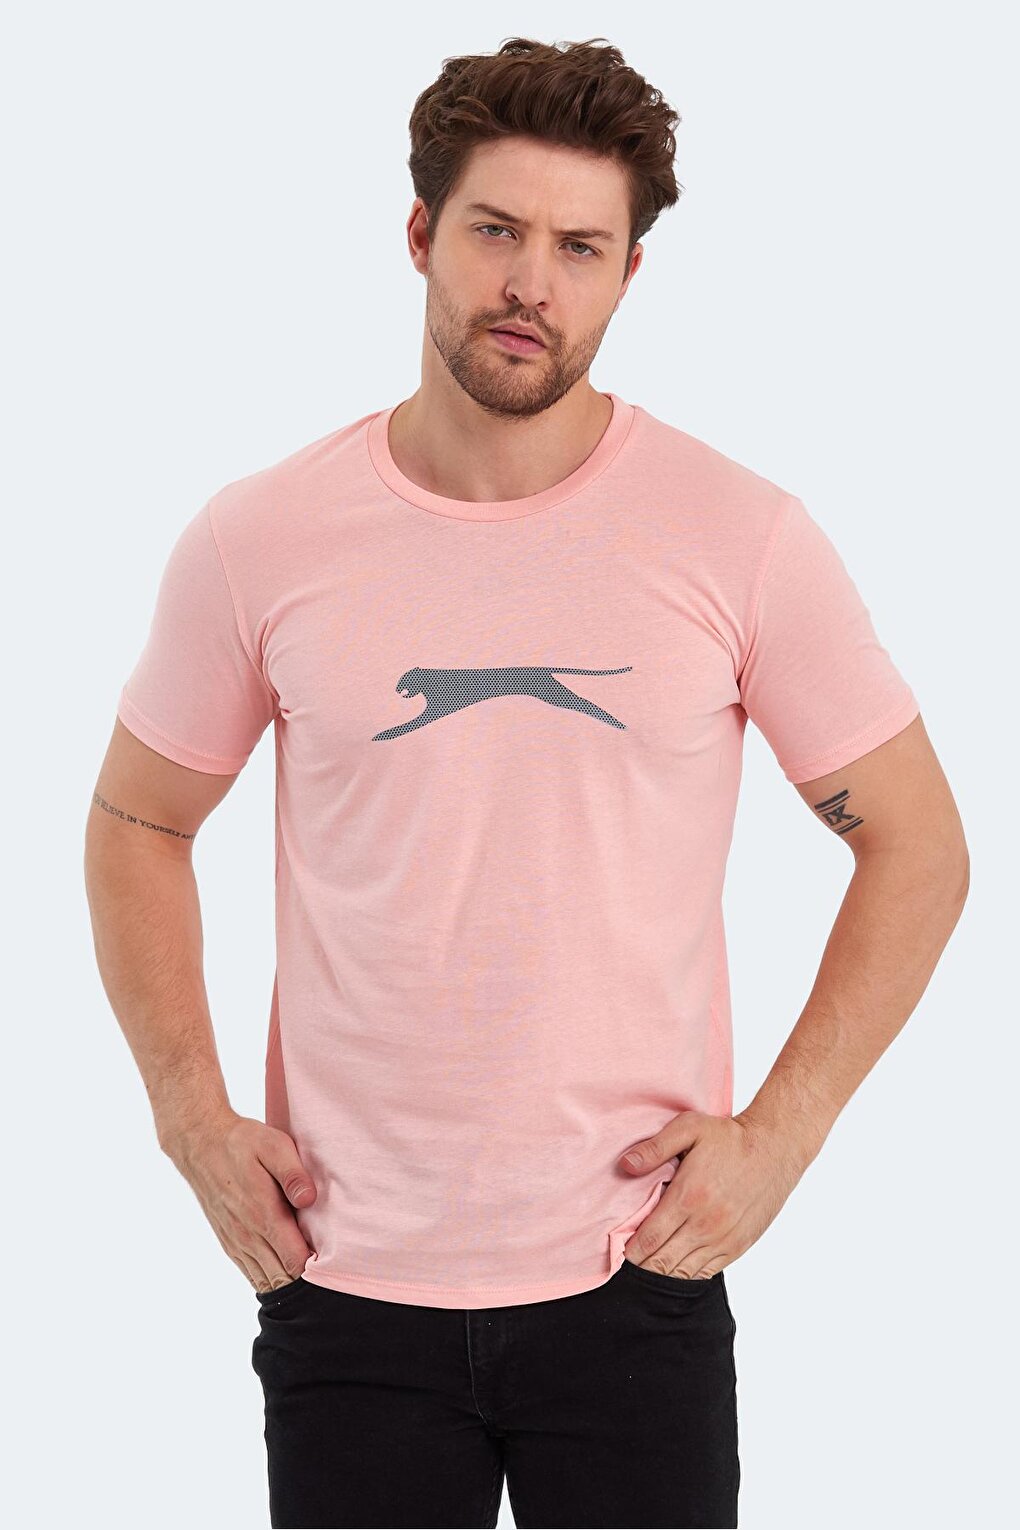 Мужская футболка с коротким рукавом SECTOR I Salmon SLAZENGER sn646 julia футболка 2fx salmon женская футболка с коротким рукавом kinetix розовый